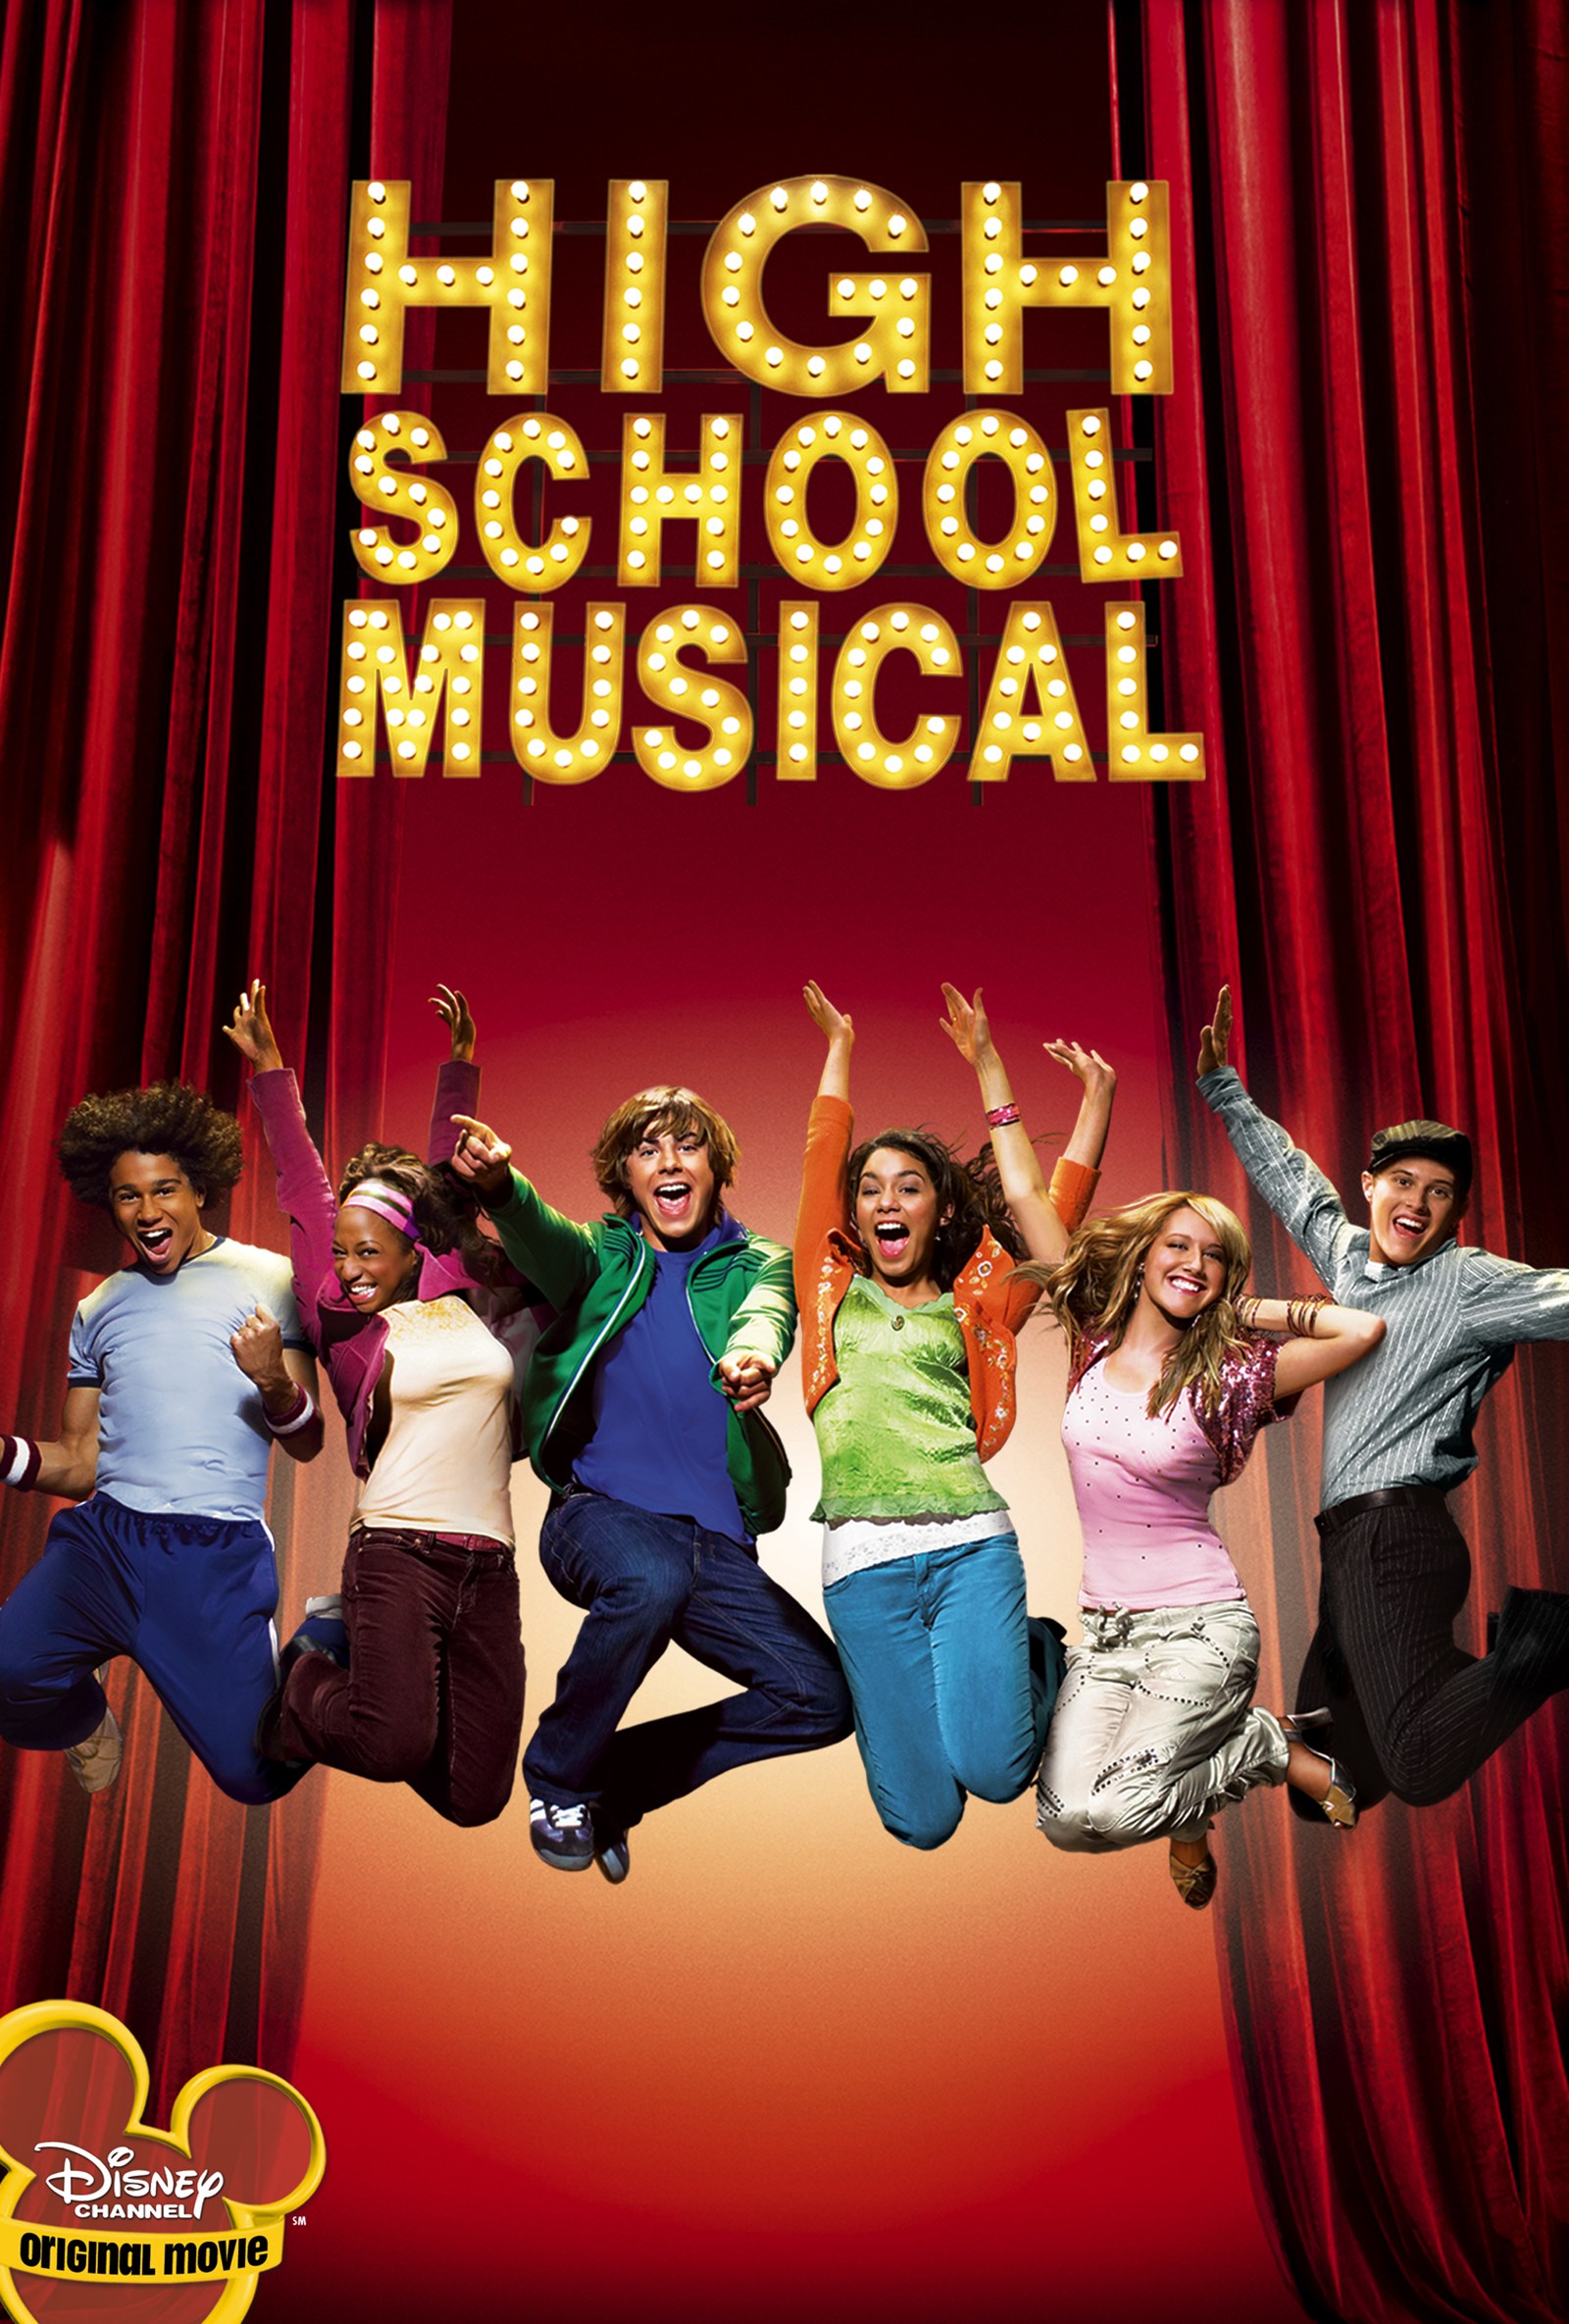 School Musical